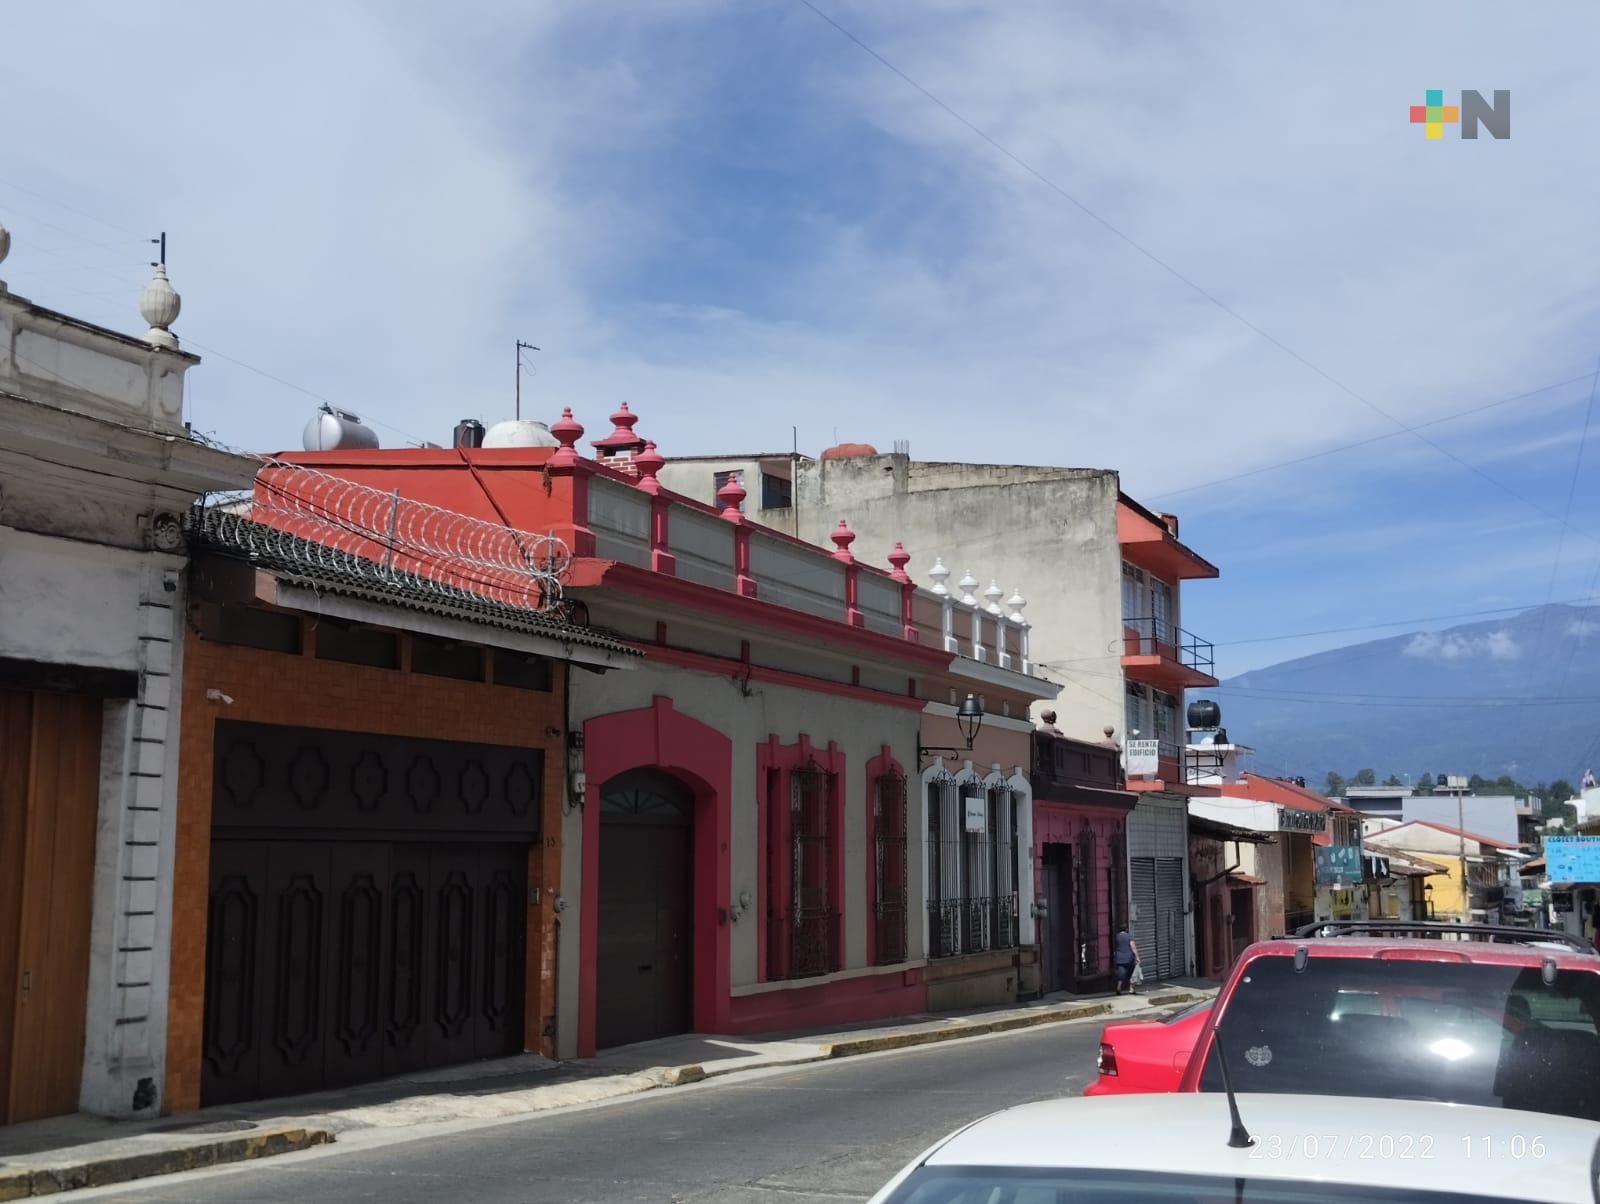 En Xalapa, delito de robo ha disminuido: regidora